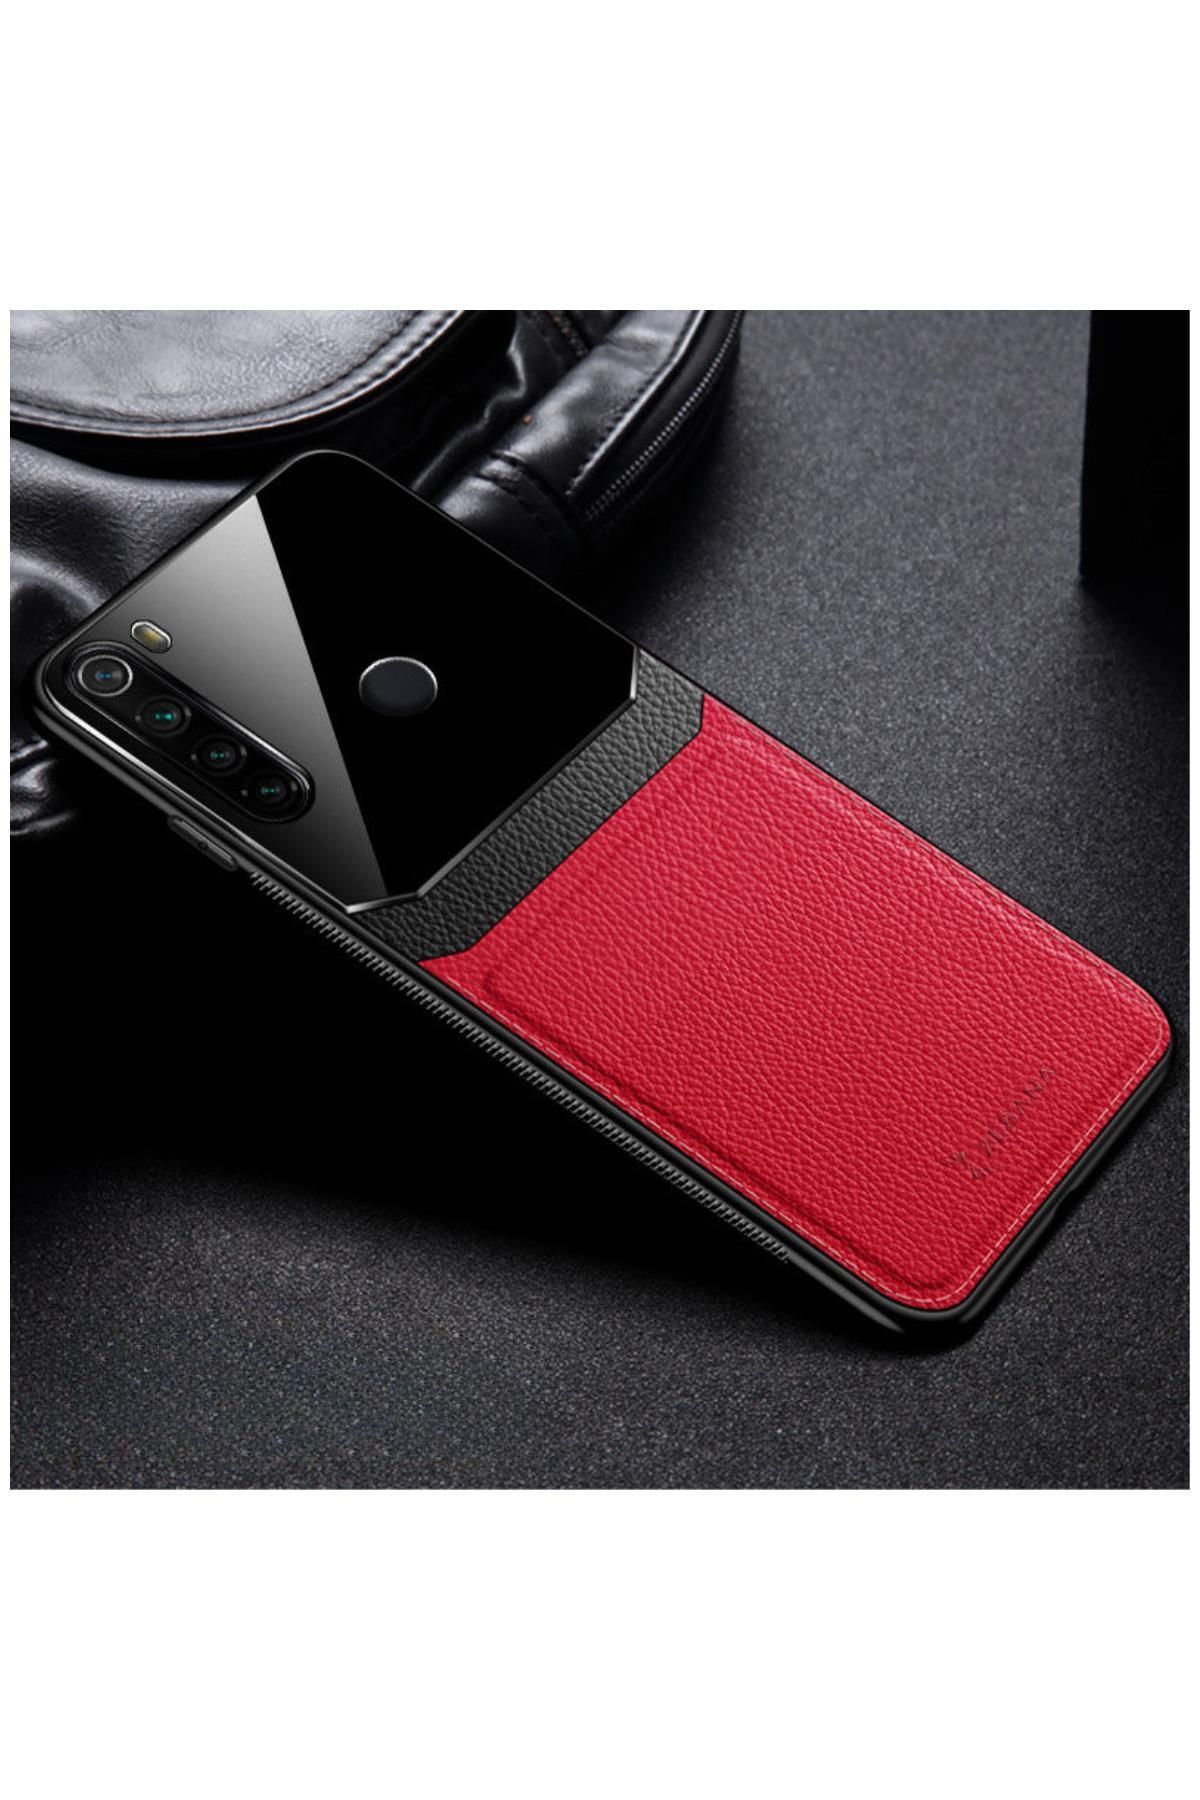 Zebana Xiaomi Redmi Note 8 Uyumlu Kılıf Lens Deri Kılıf Kırmızı